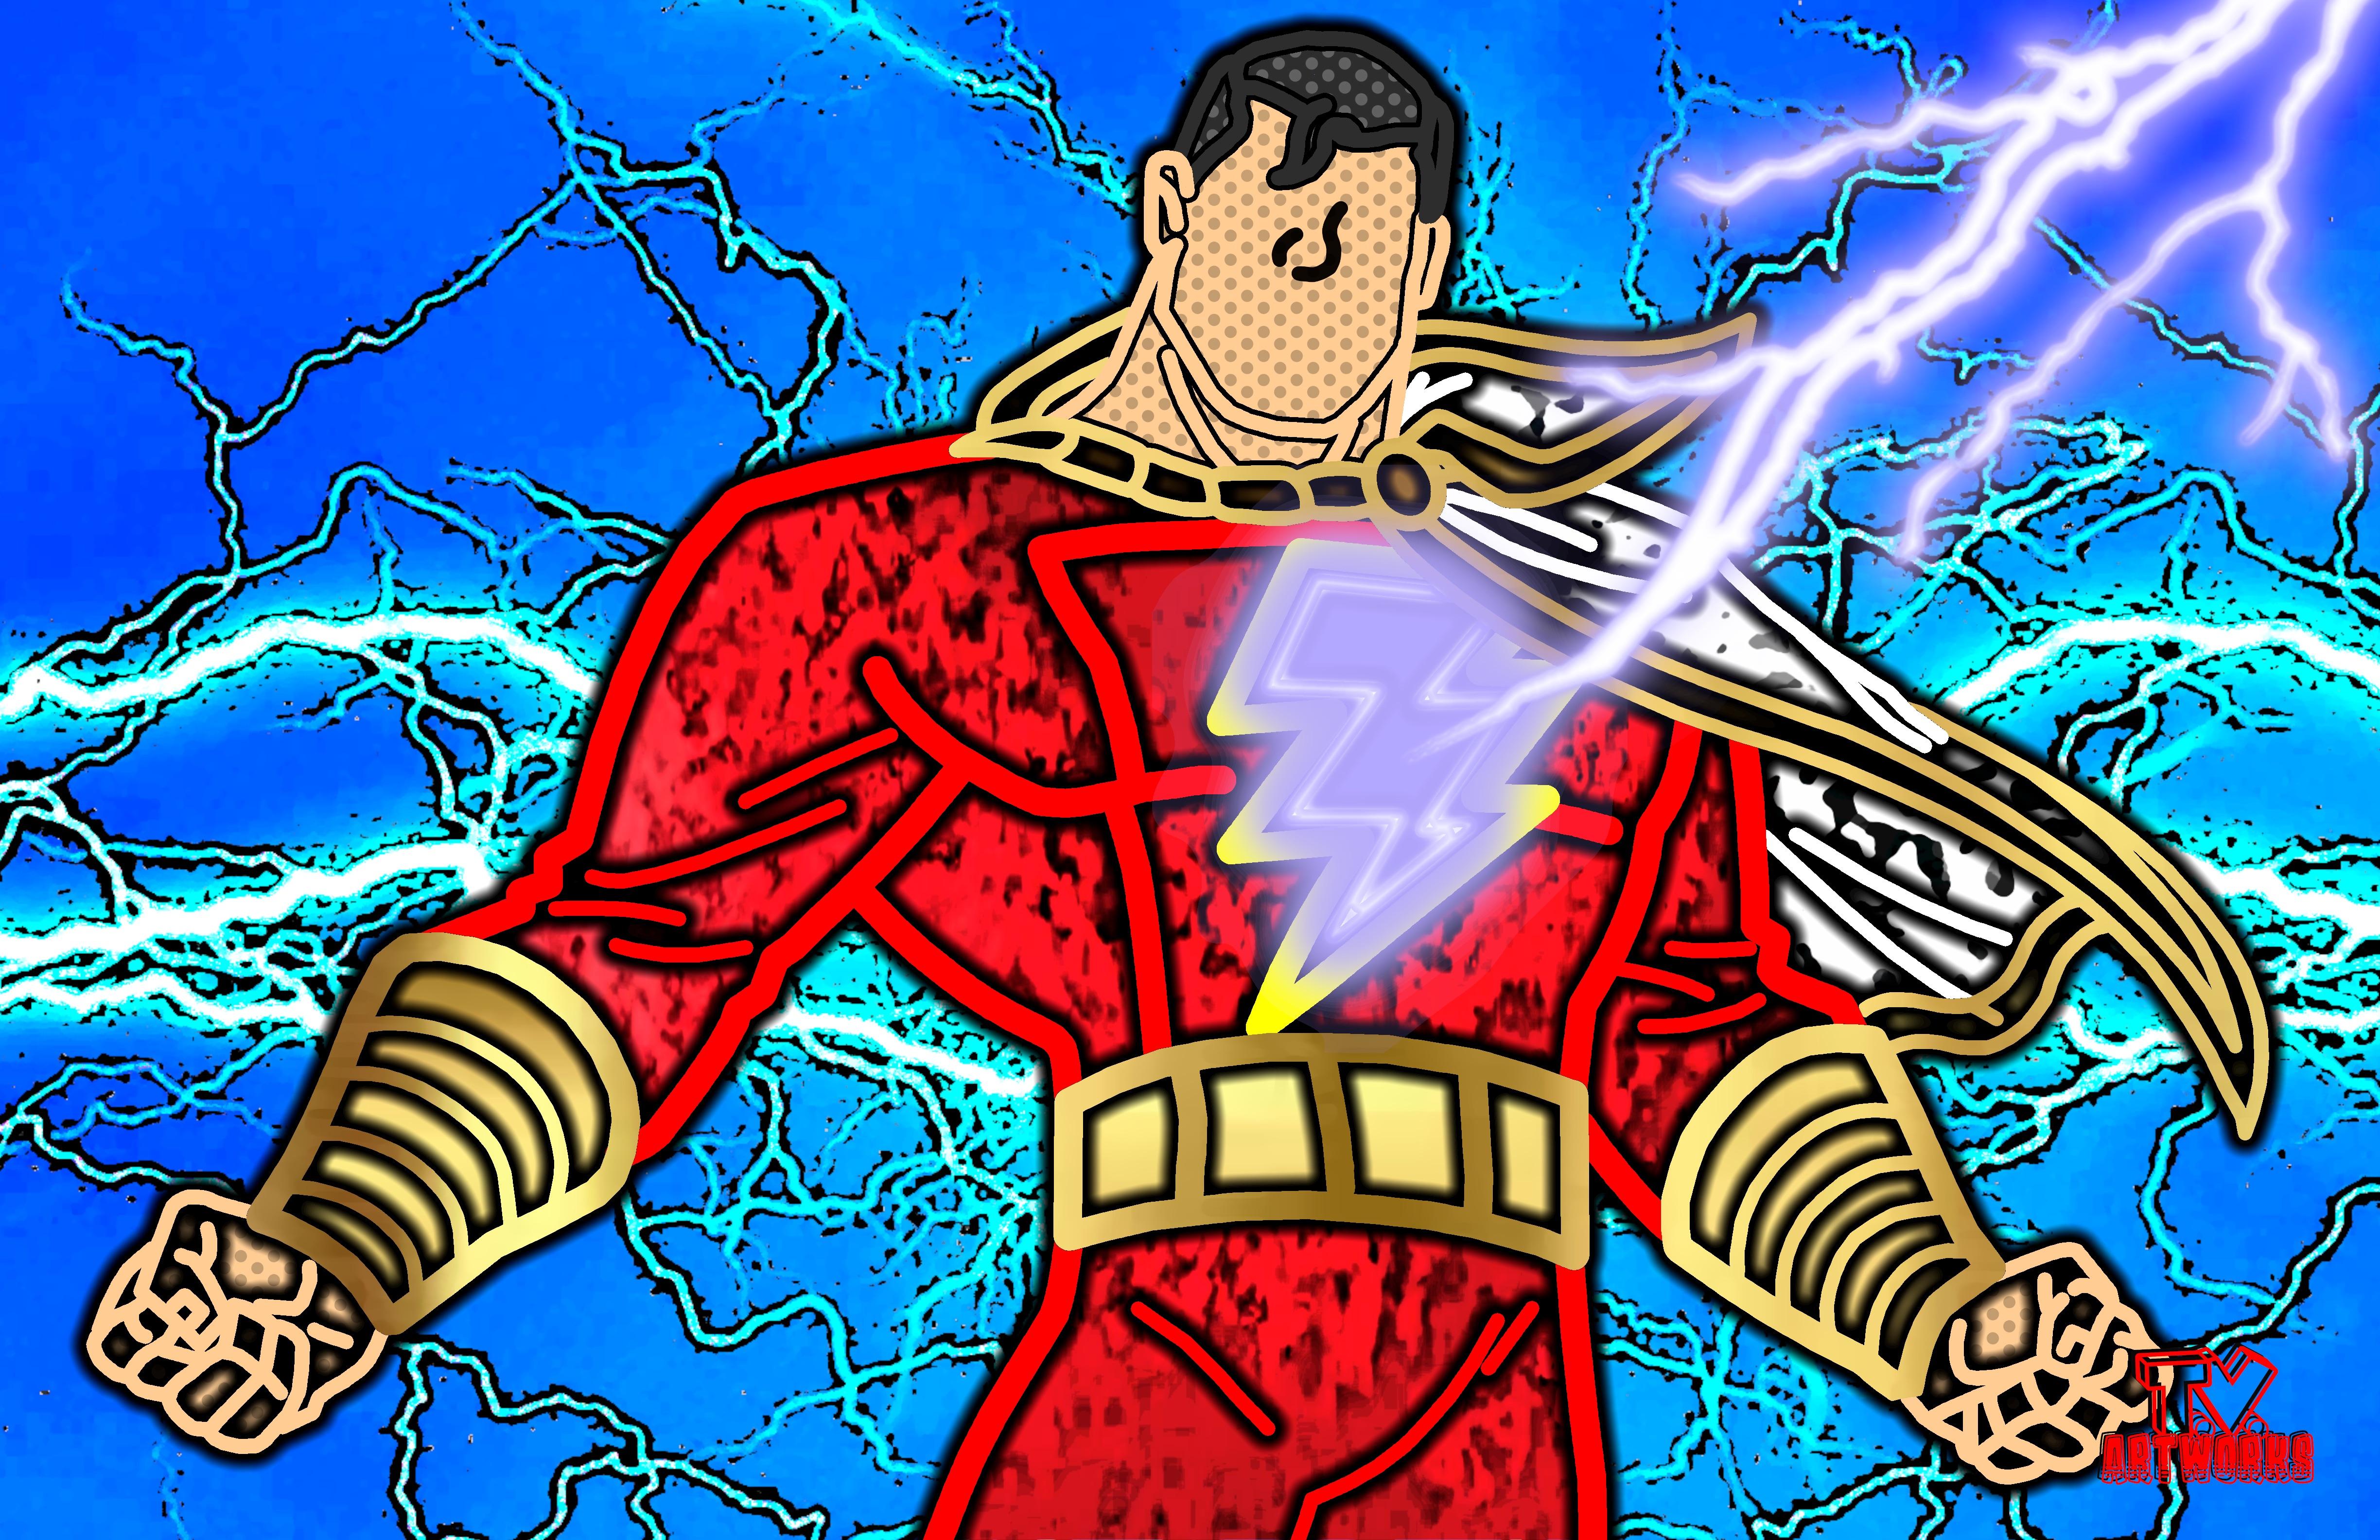 The OG Captain Marvel AKA Shazam! With textured inlay. @TVArtworks |  Scrolller